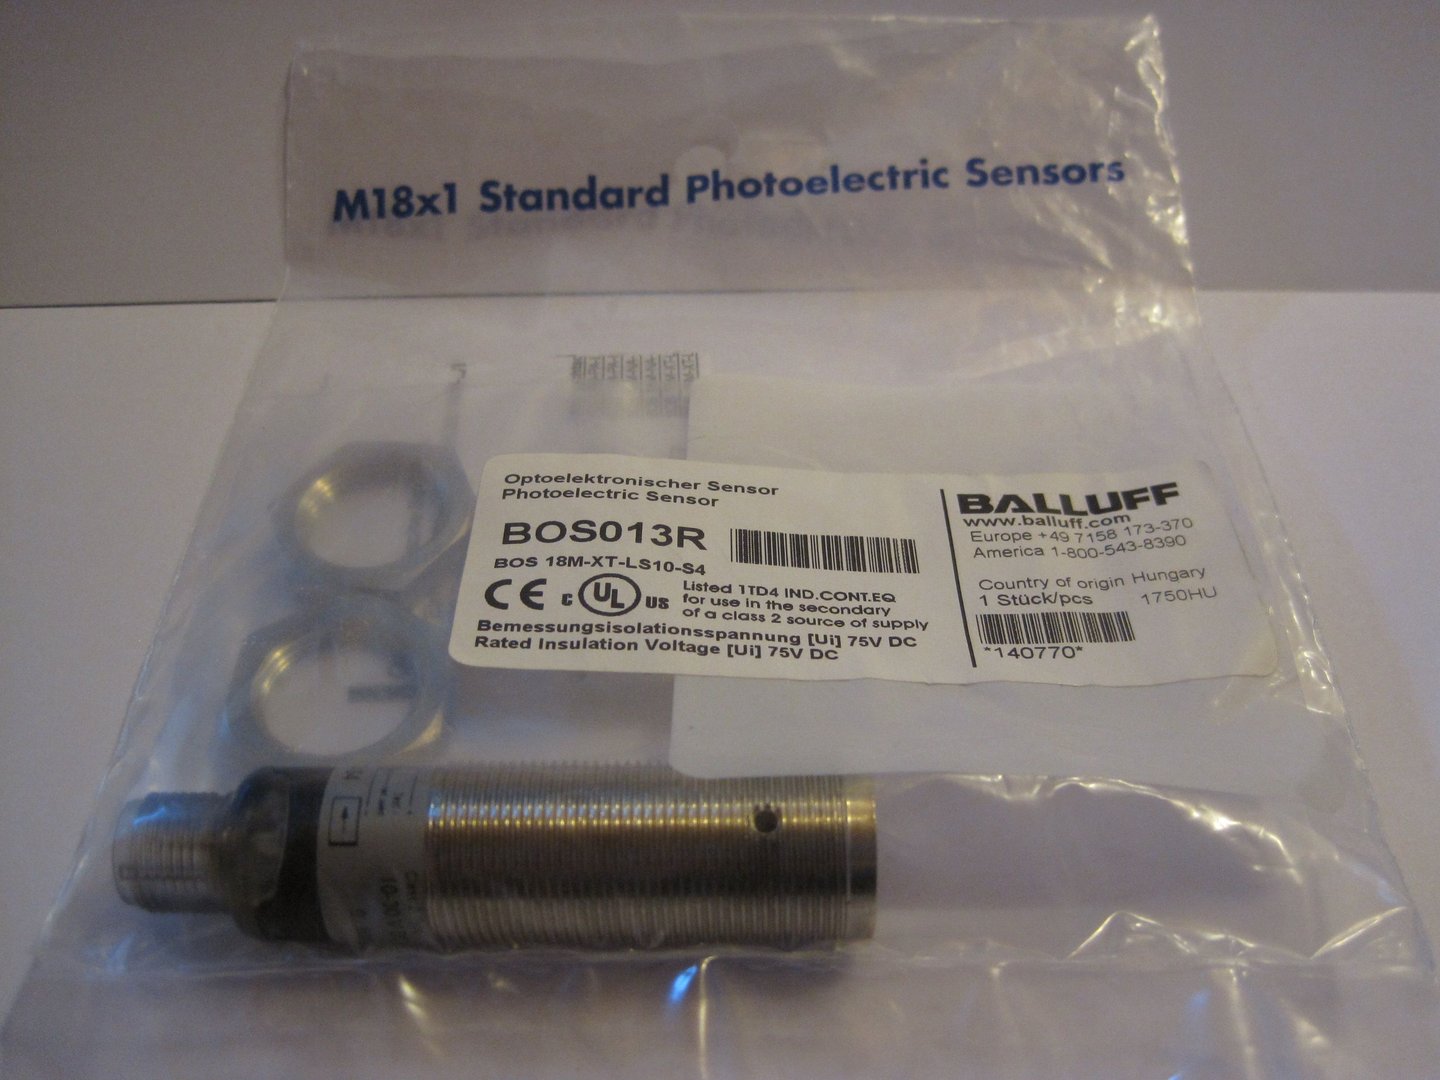 Balluff BOS 18M-XT-LS10-S4 BOS013R 140770 Photoelectric Sensor New In Box 